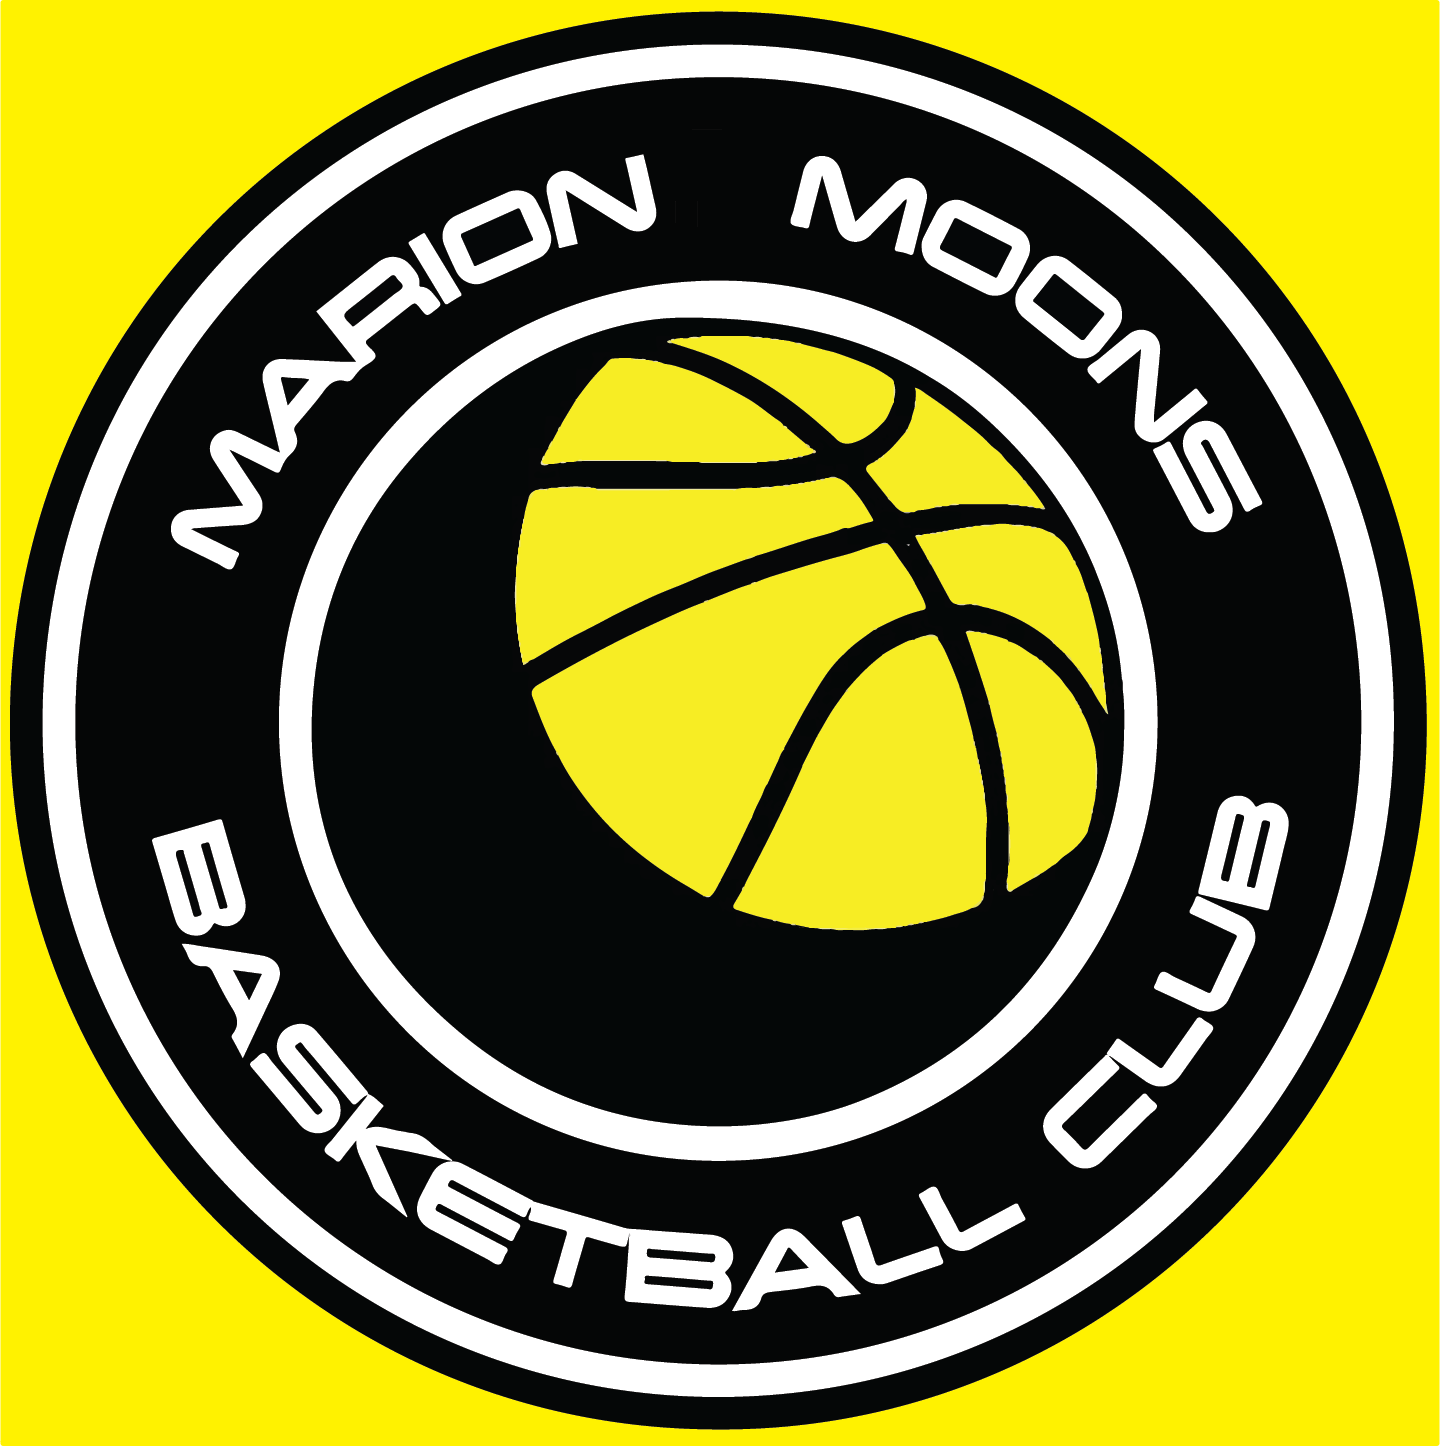 Marion Moons Basketball Club